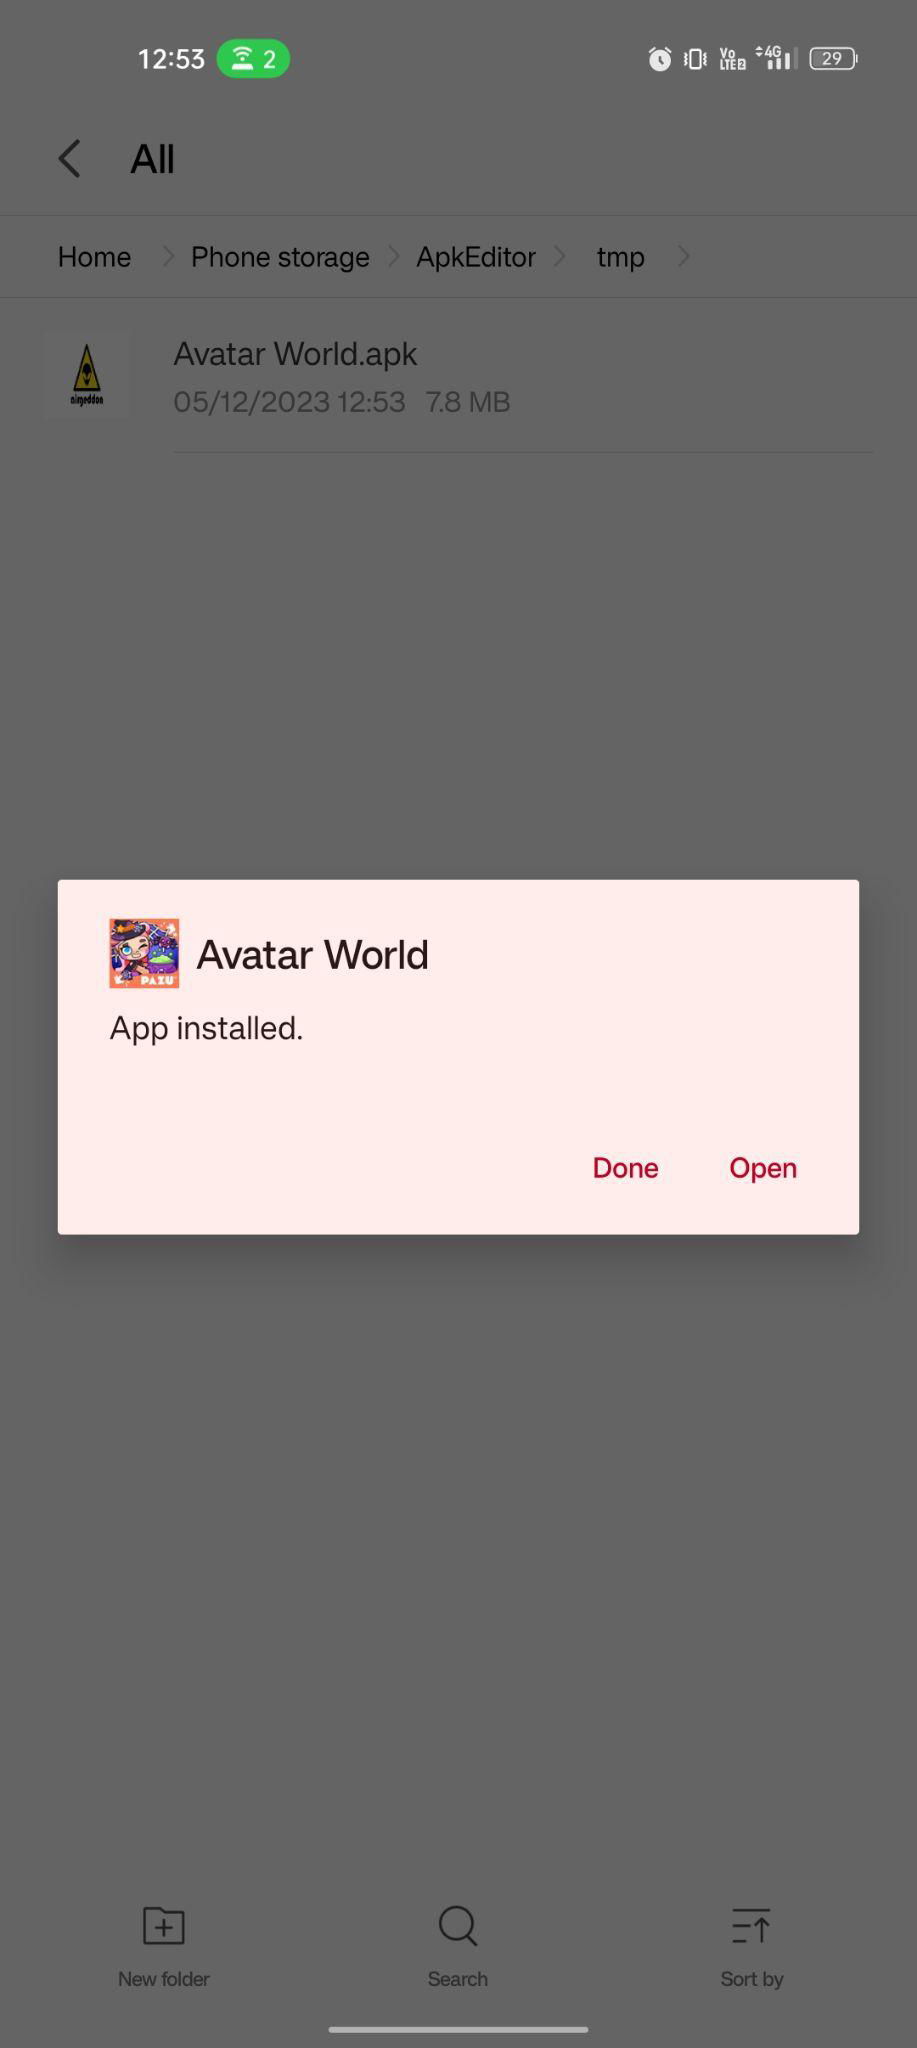 Avatar World apk installed